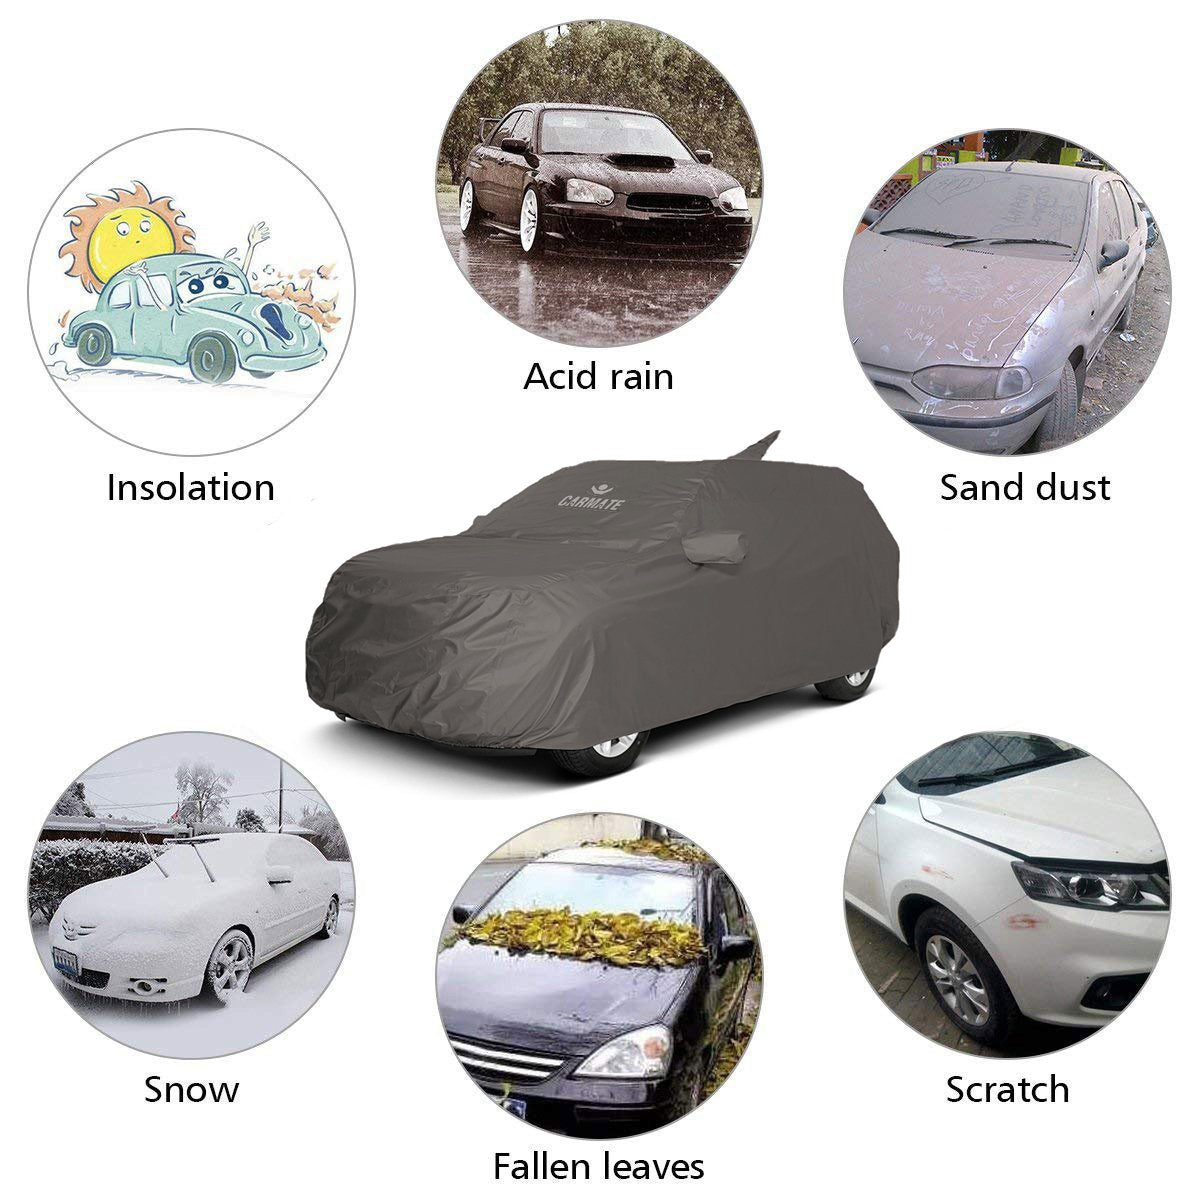 Carmate Car Body Cover 100% Waterproof Pride (Grey) for Mahindra - Xylo - CARMATE®